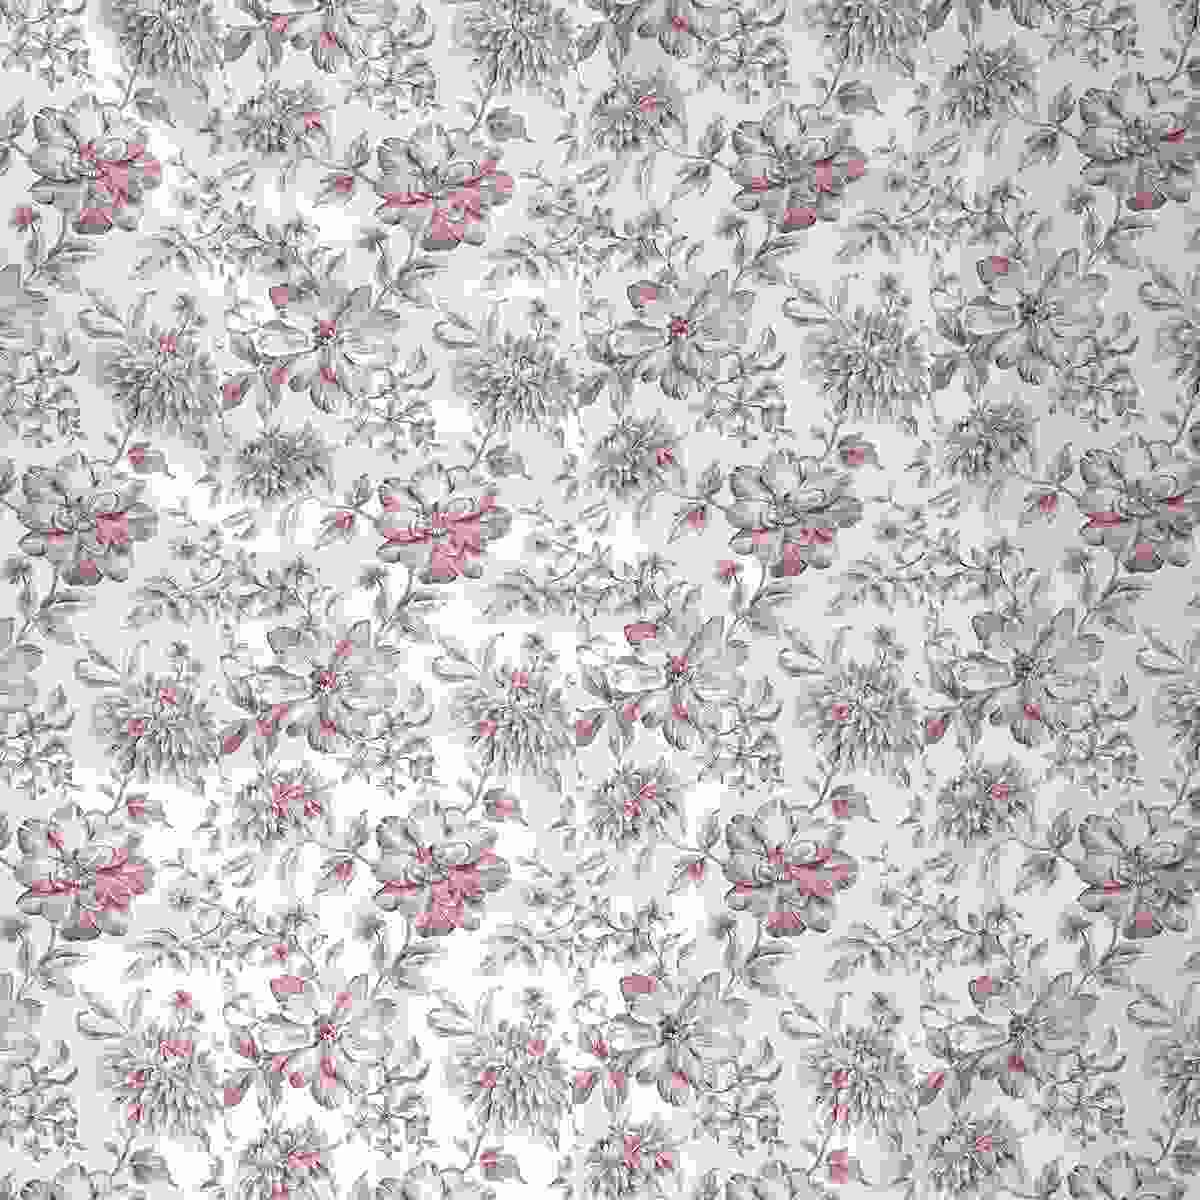 Regency Alicia Printed 210TC 100 %Cotton Pink Bed Sheet